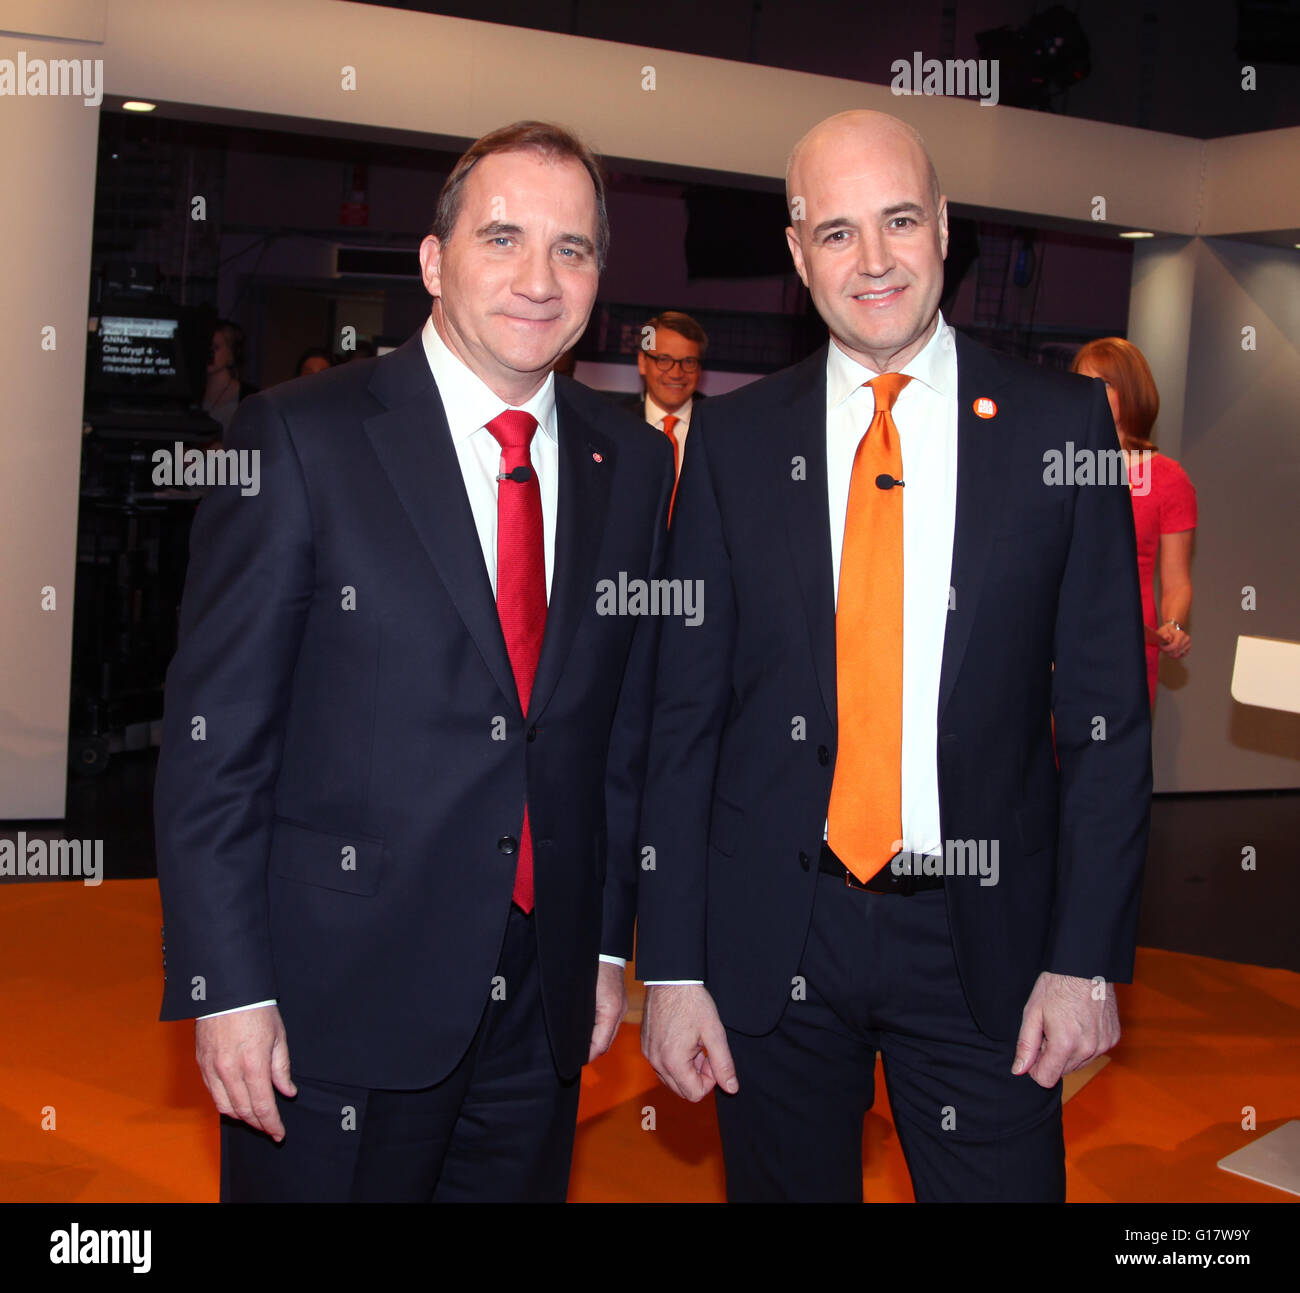 STEFAN LÖFVÉN,manodopera e Fredrik Reinfeldt ,conservatori prima elezione campaigne Foto Stock